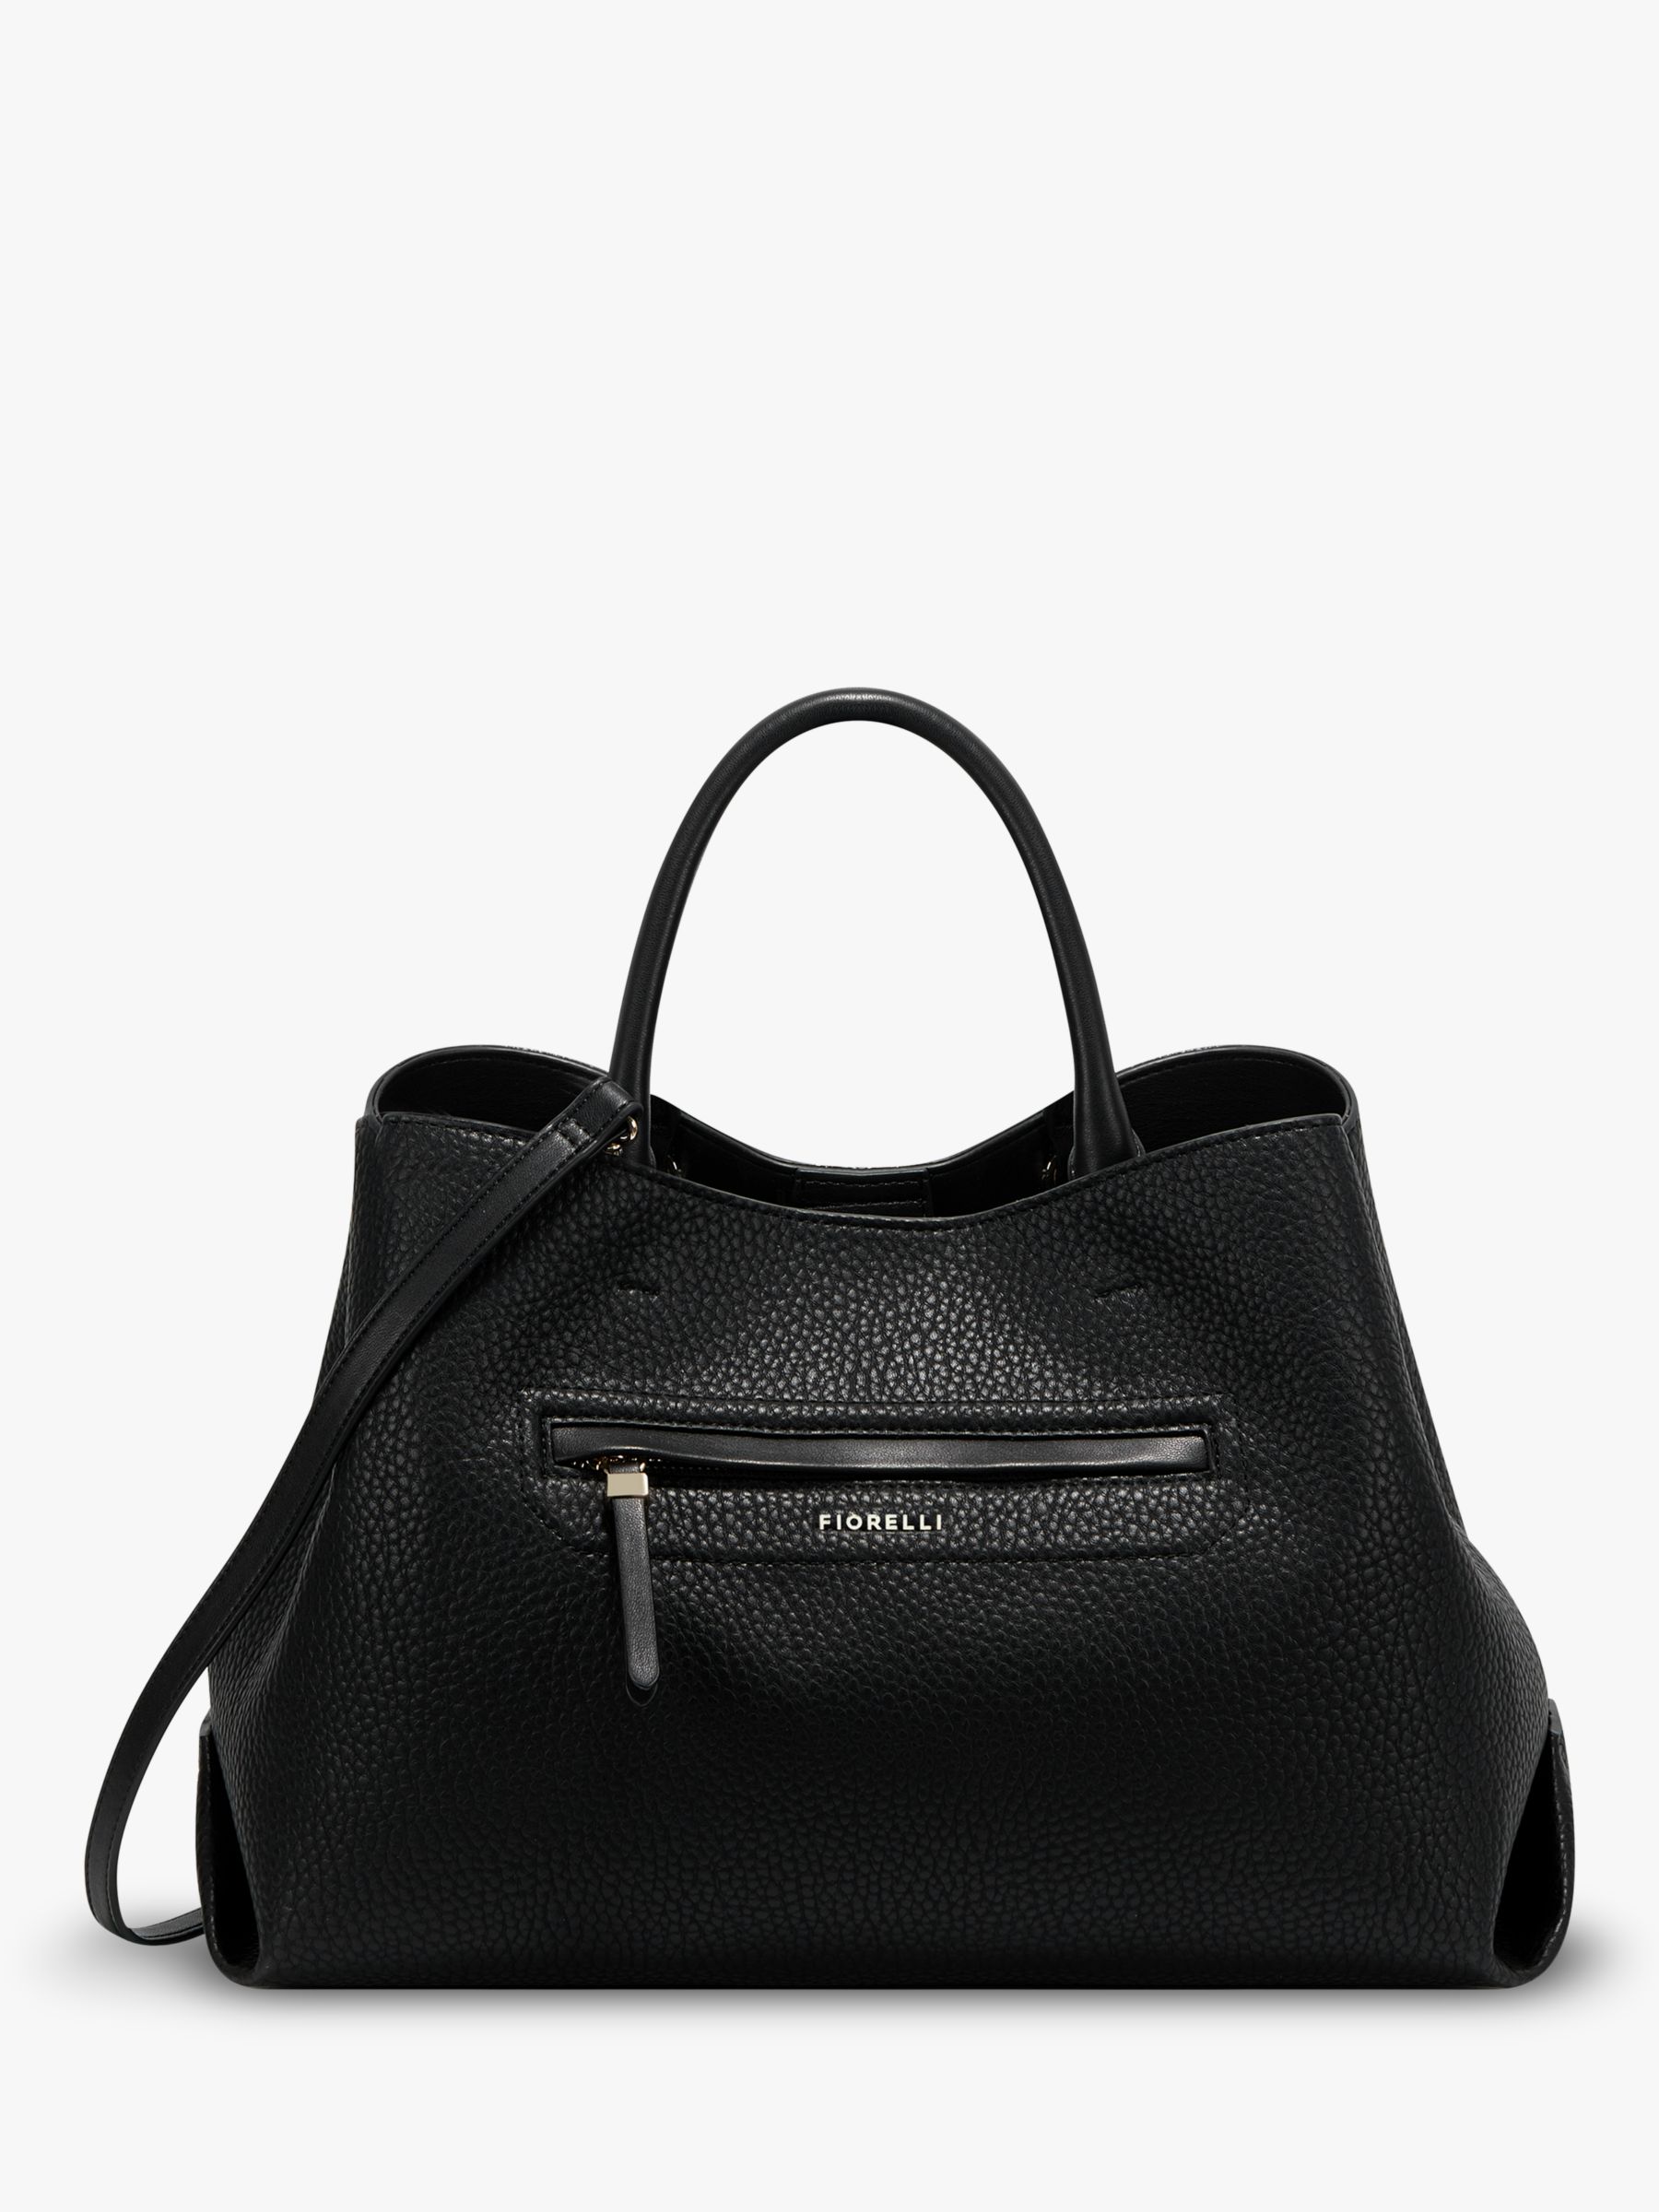 Fiorelli Agatha Grab Bag, Black at John Lewis & Partners